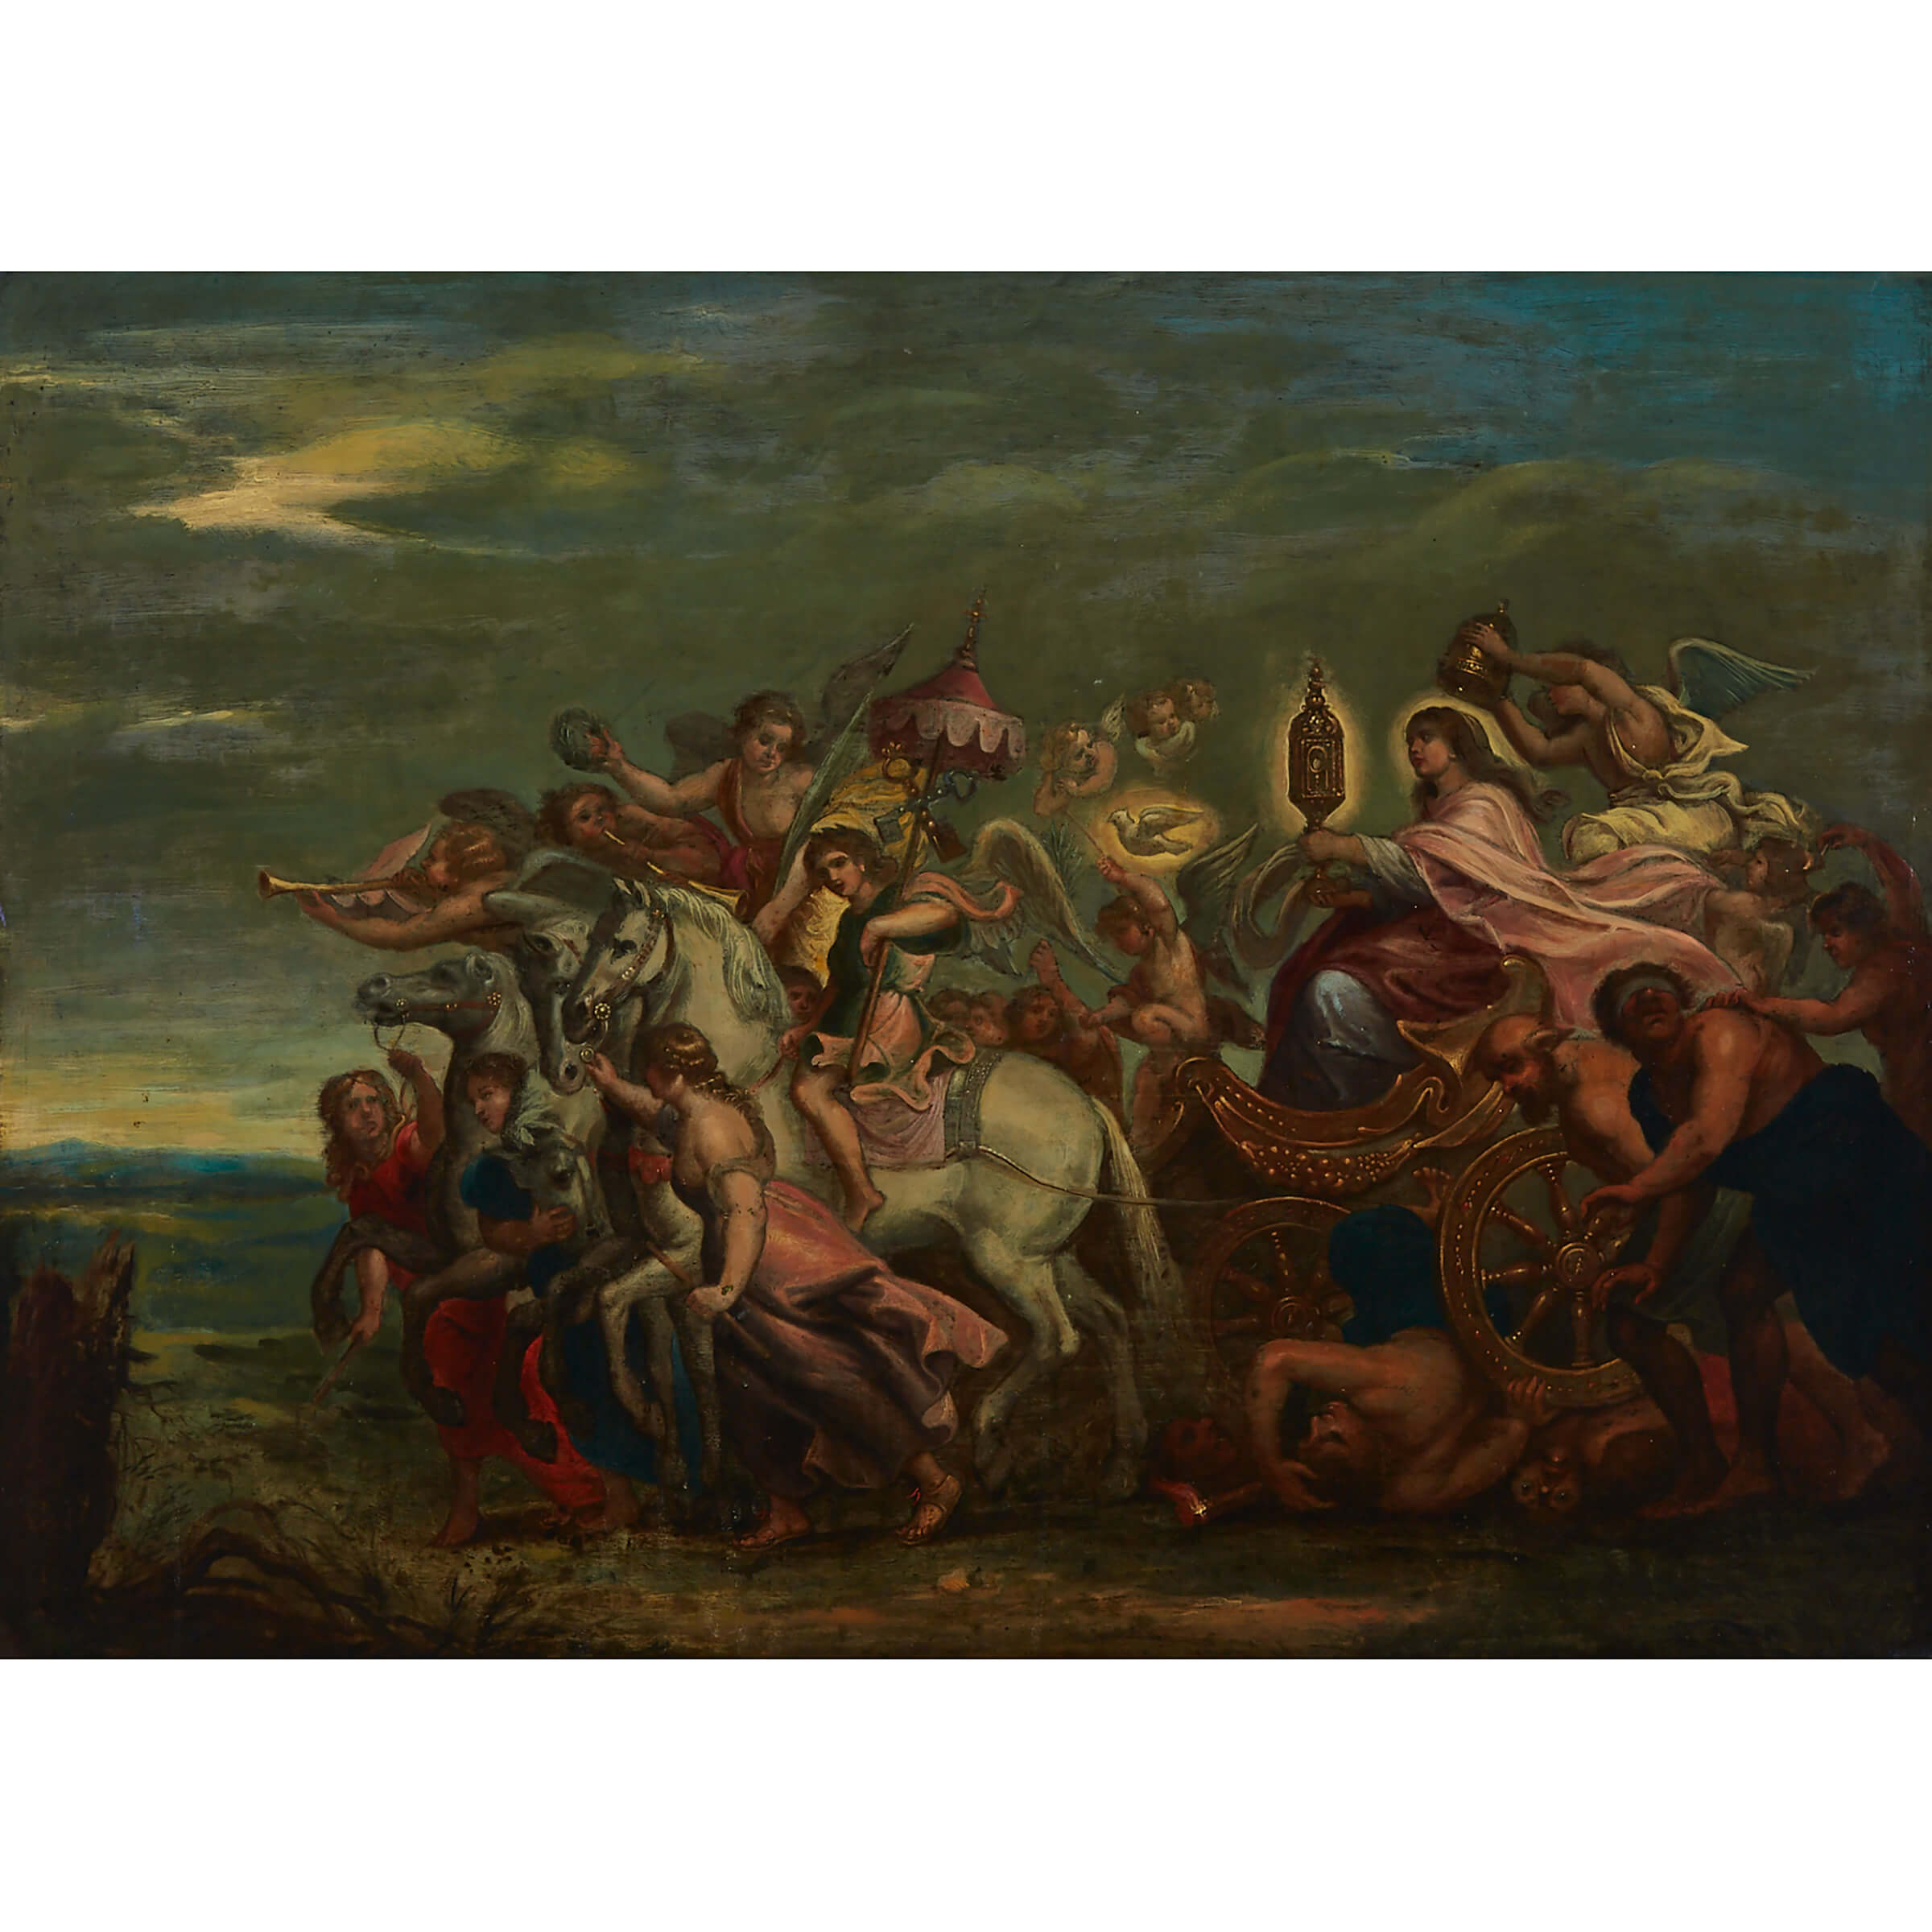 After Peter Paul Rubens (1577-1640), Flemish